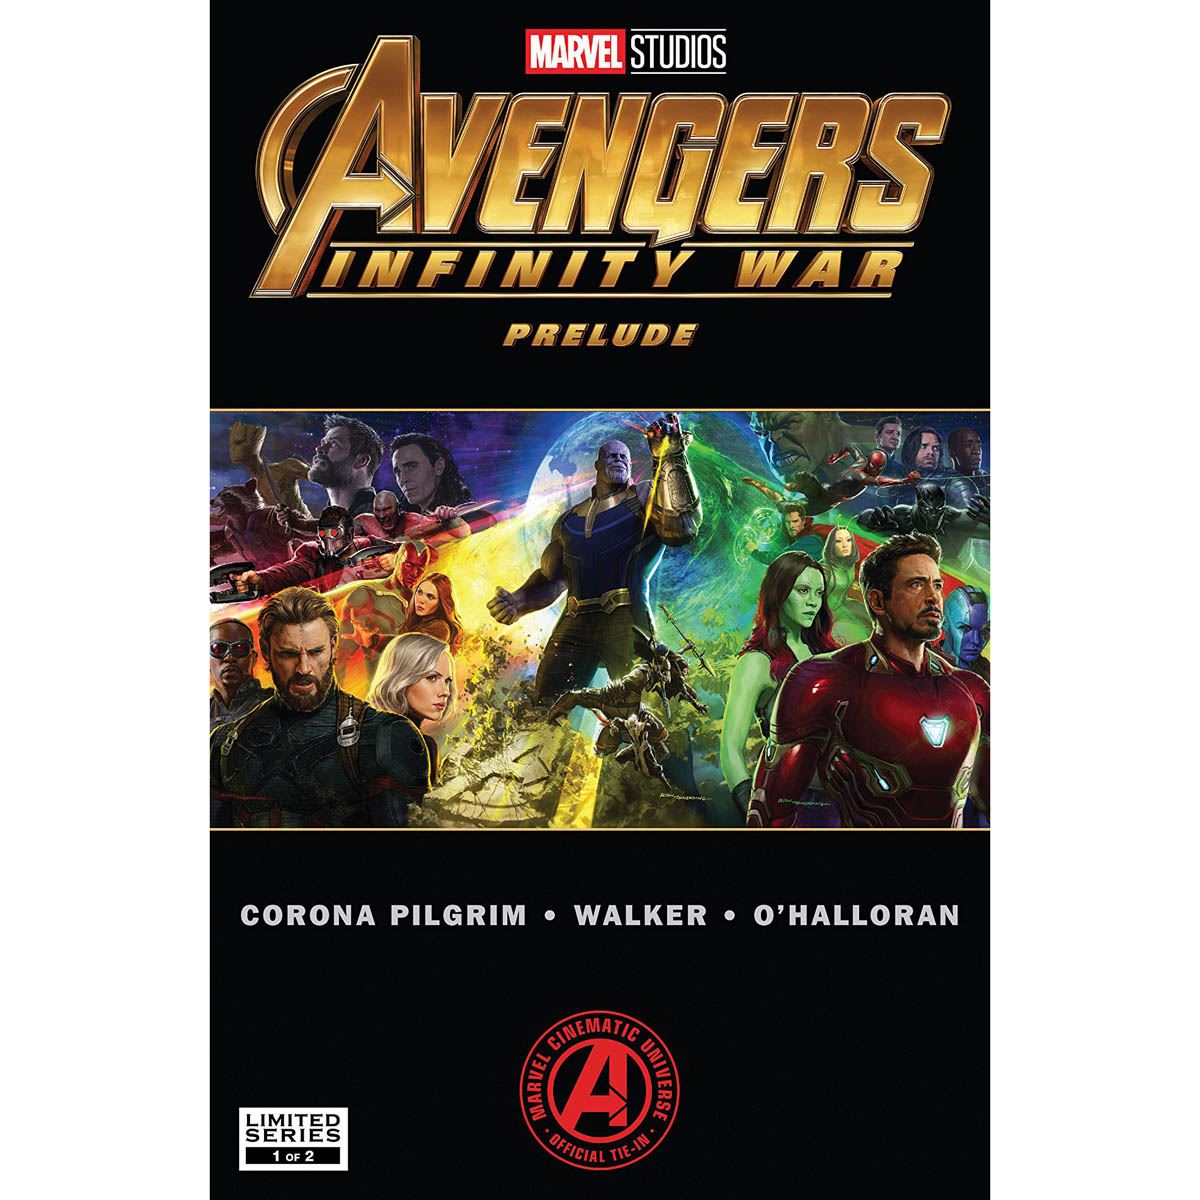 Comic Marvels Avengers infinity war prelude